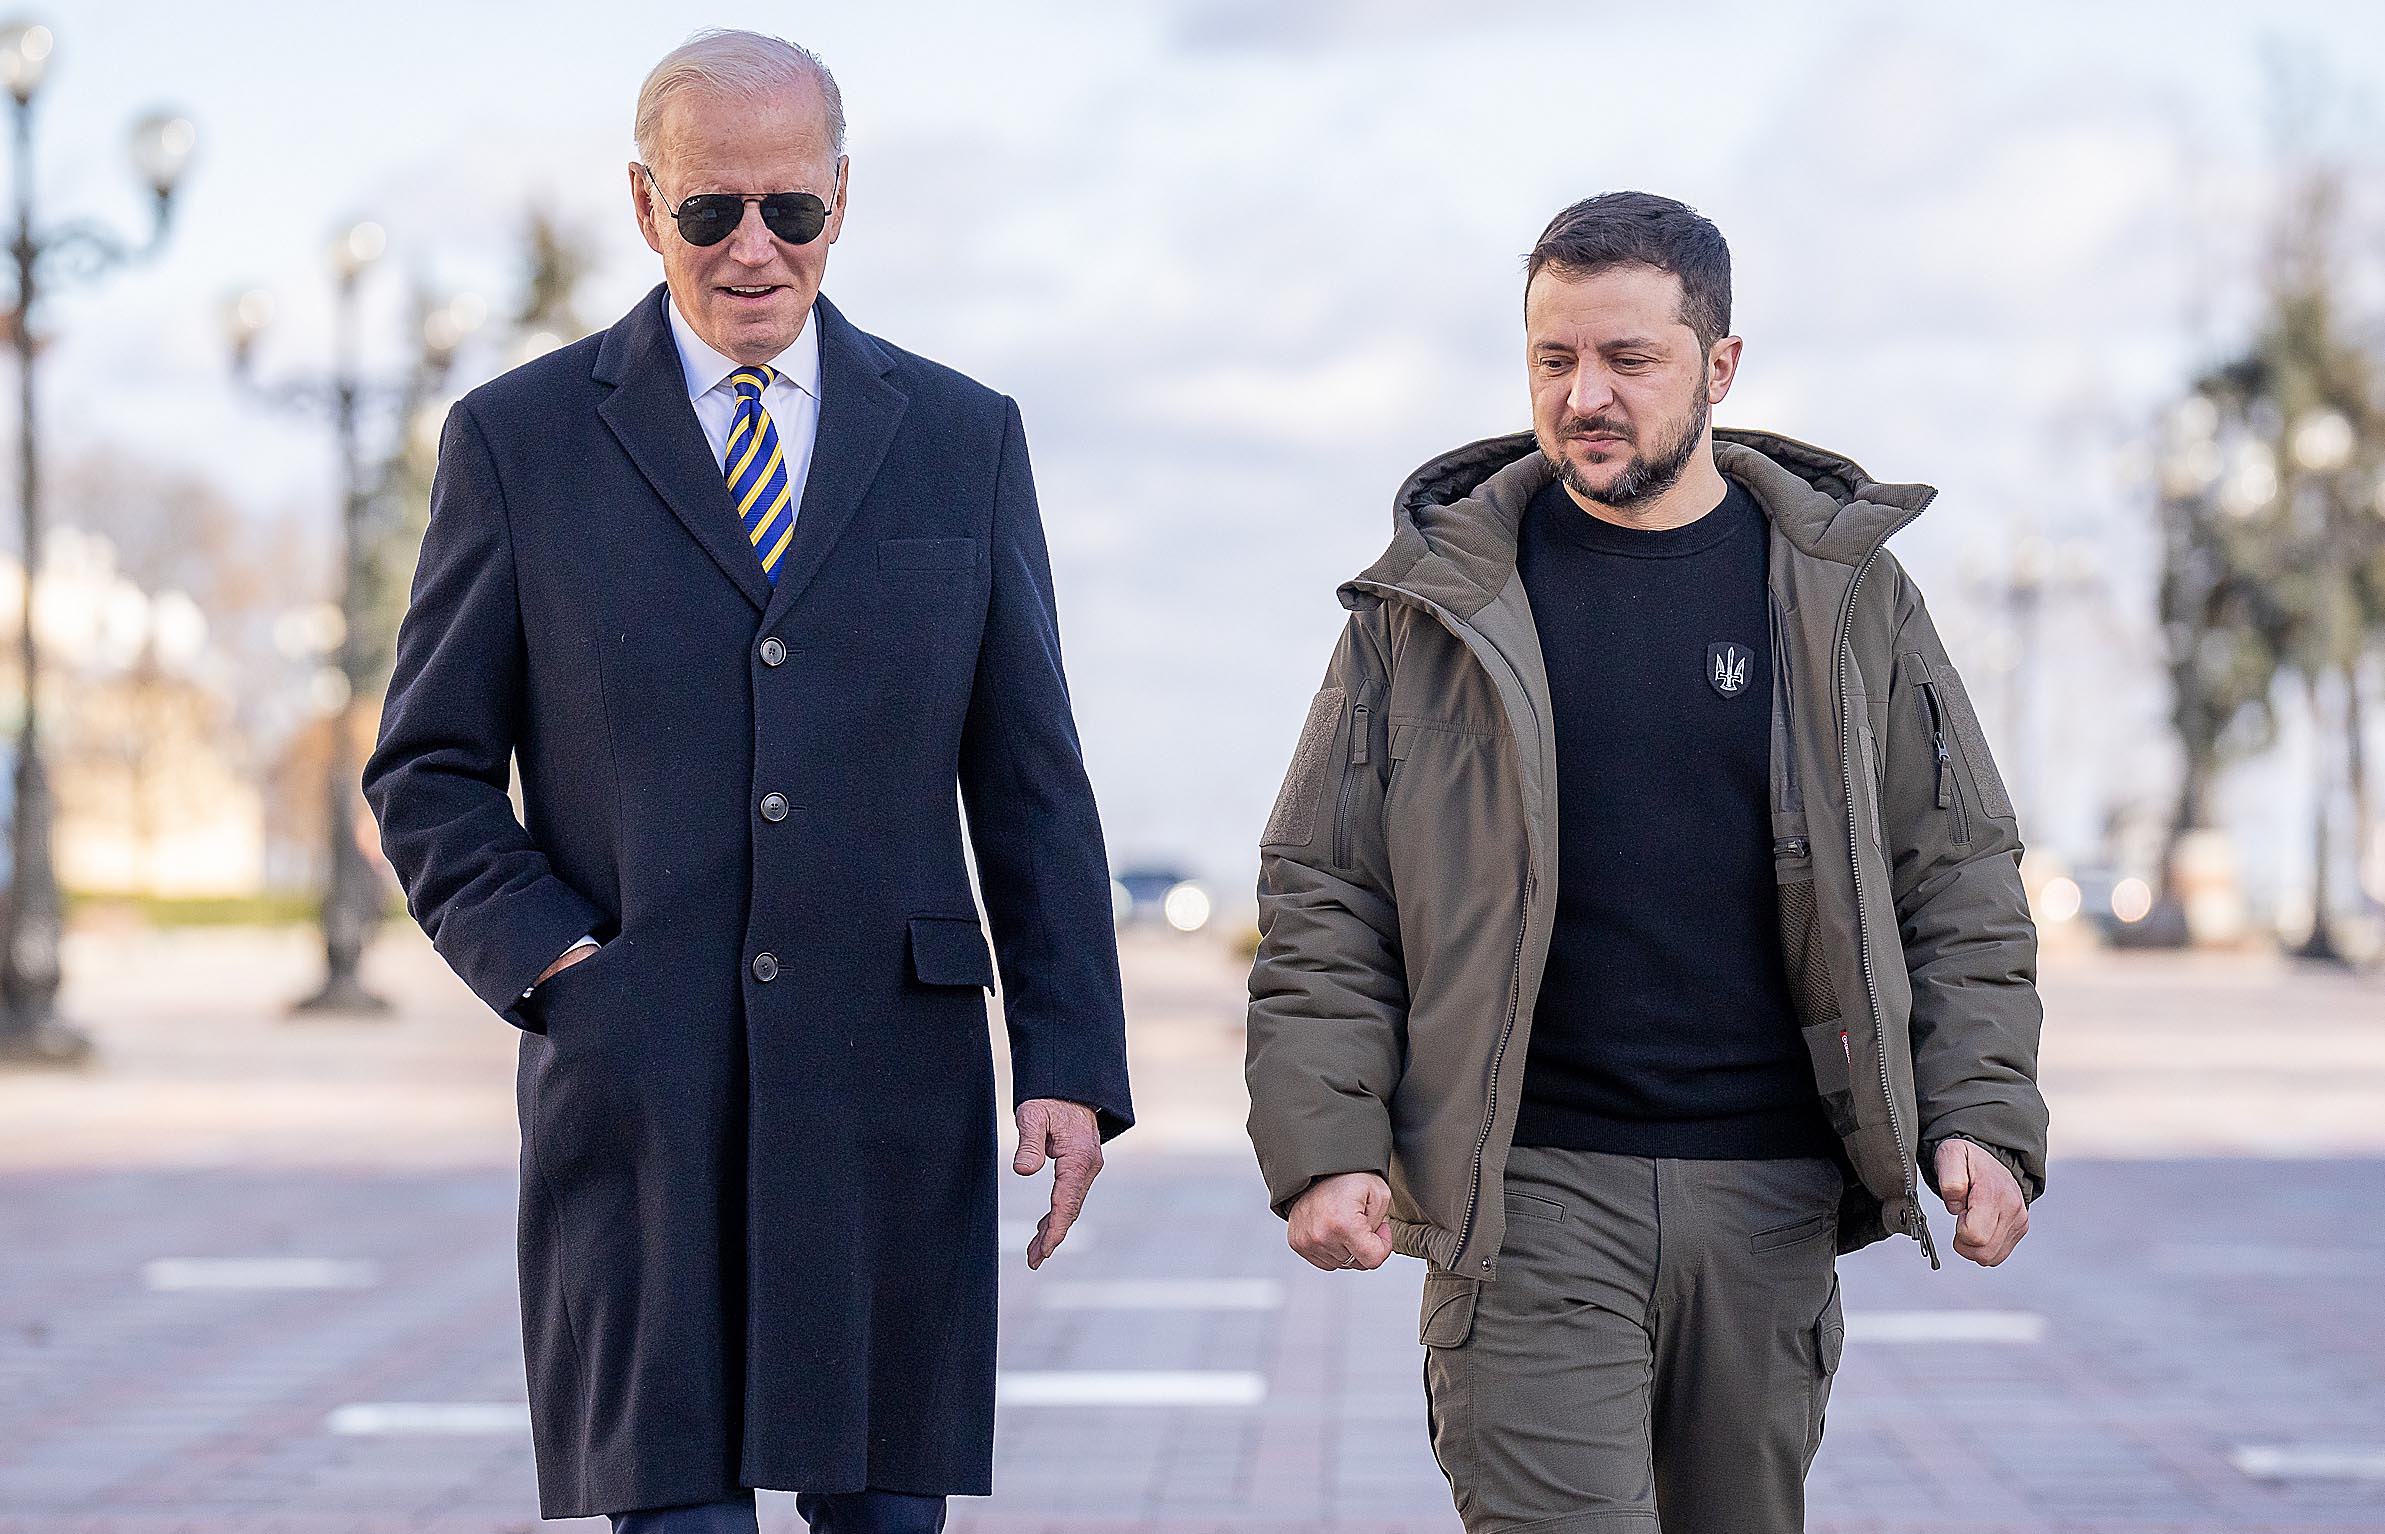 Biden's visit to Ukraine: Before Biden's visit, the American missile shield was in active mode